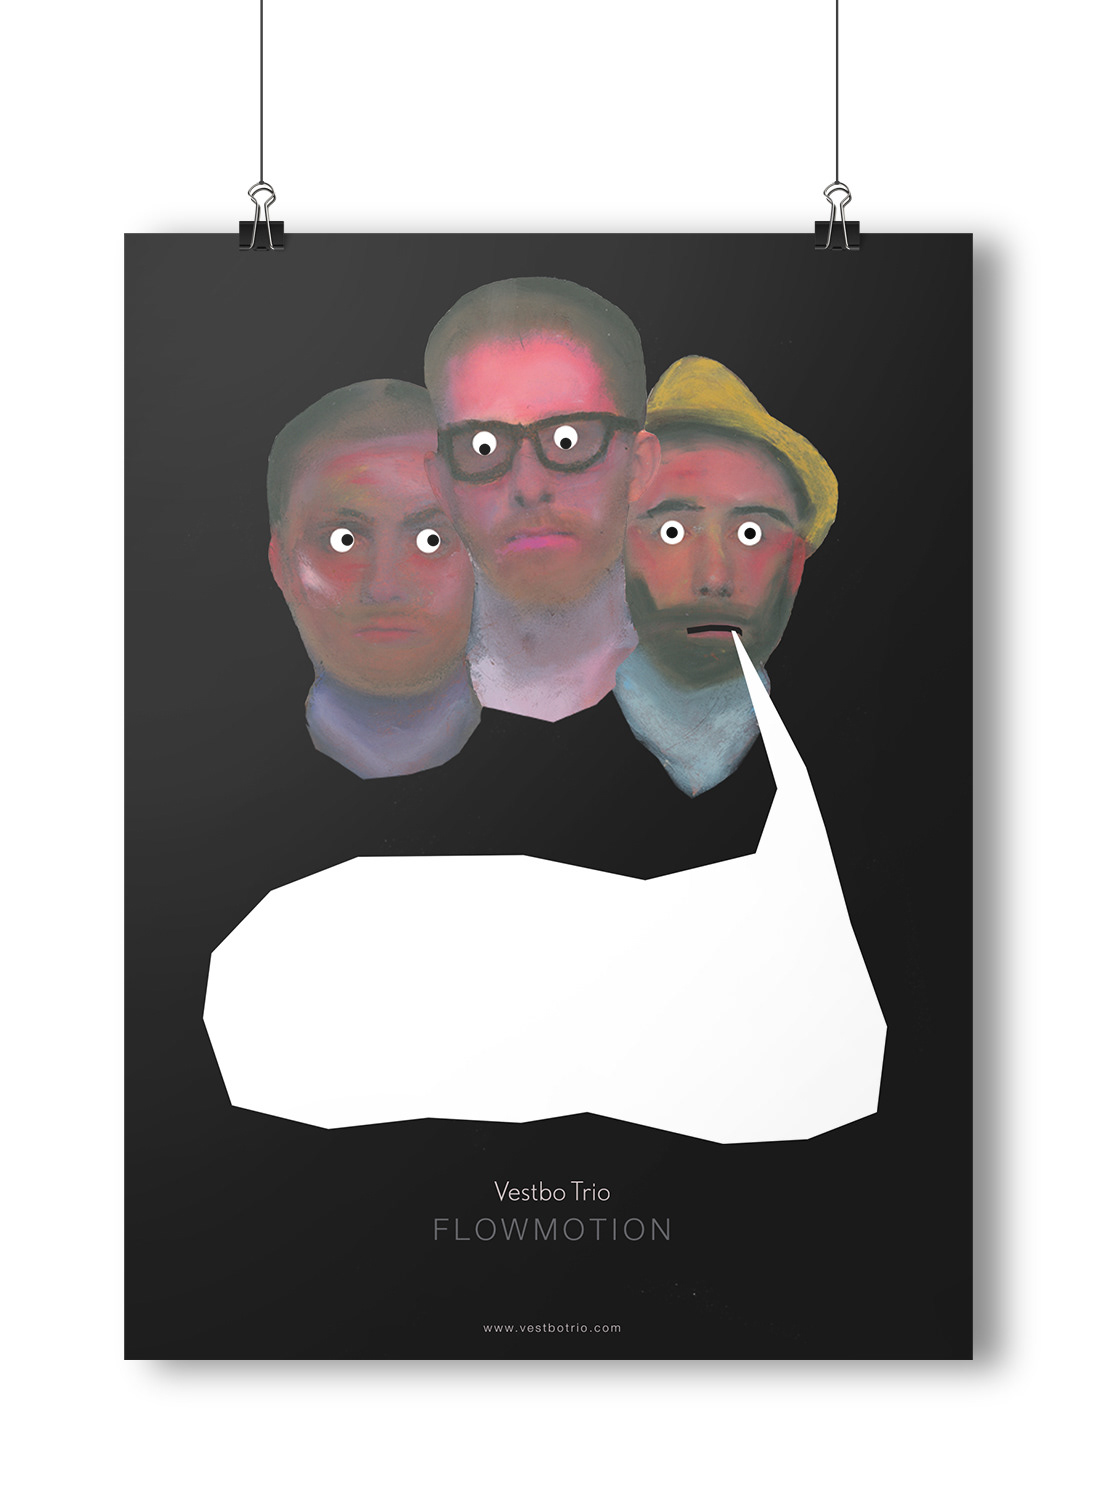 Vestbo Trio flowmotion CD cover lp cover art oil pastel